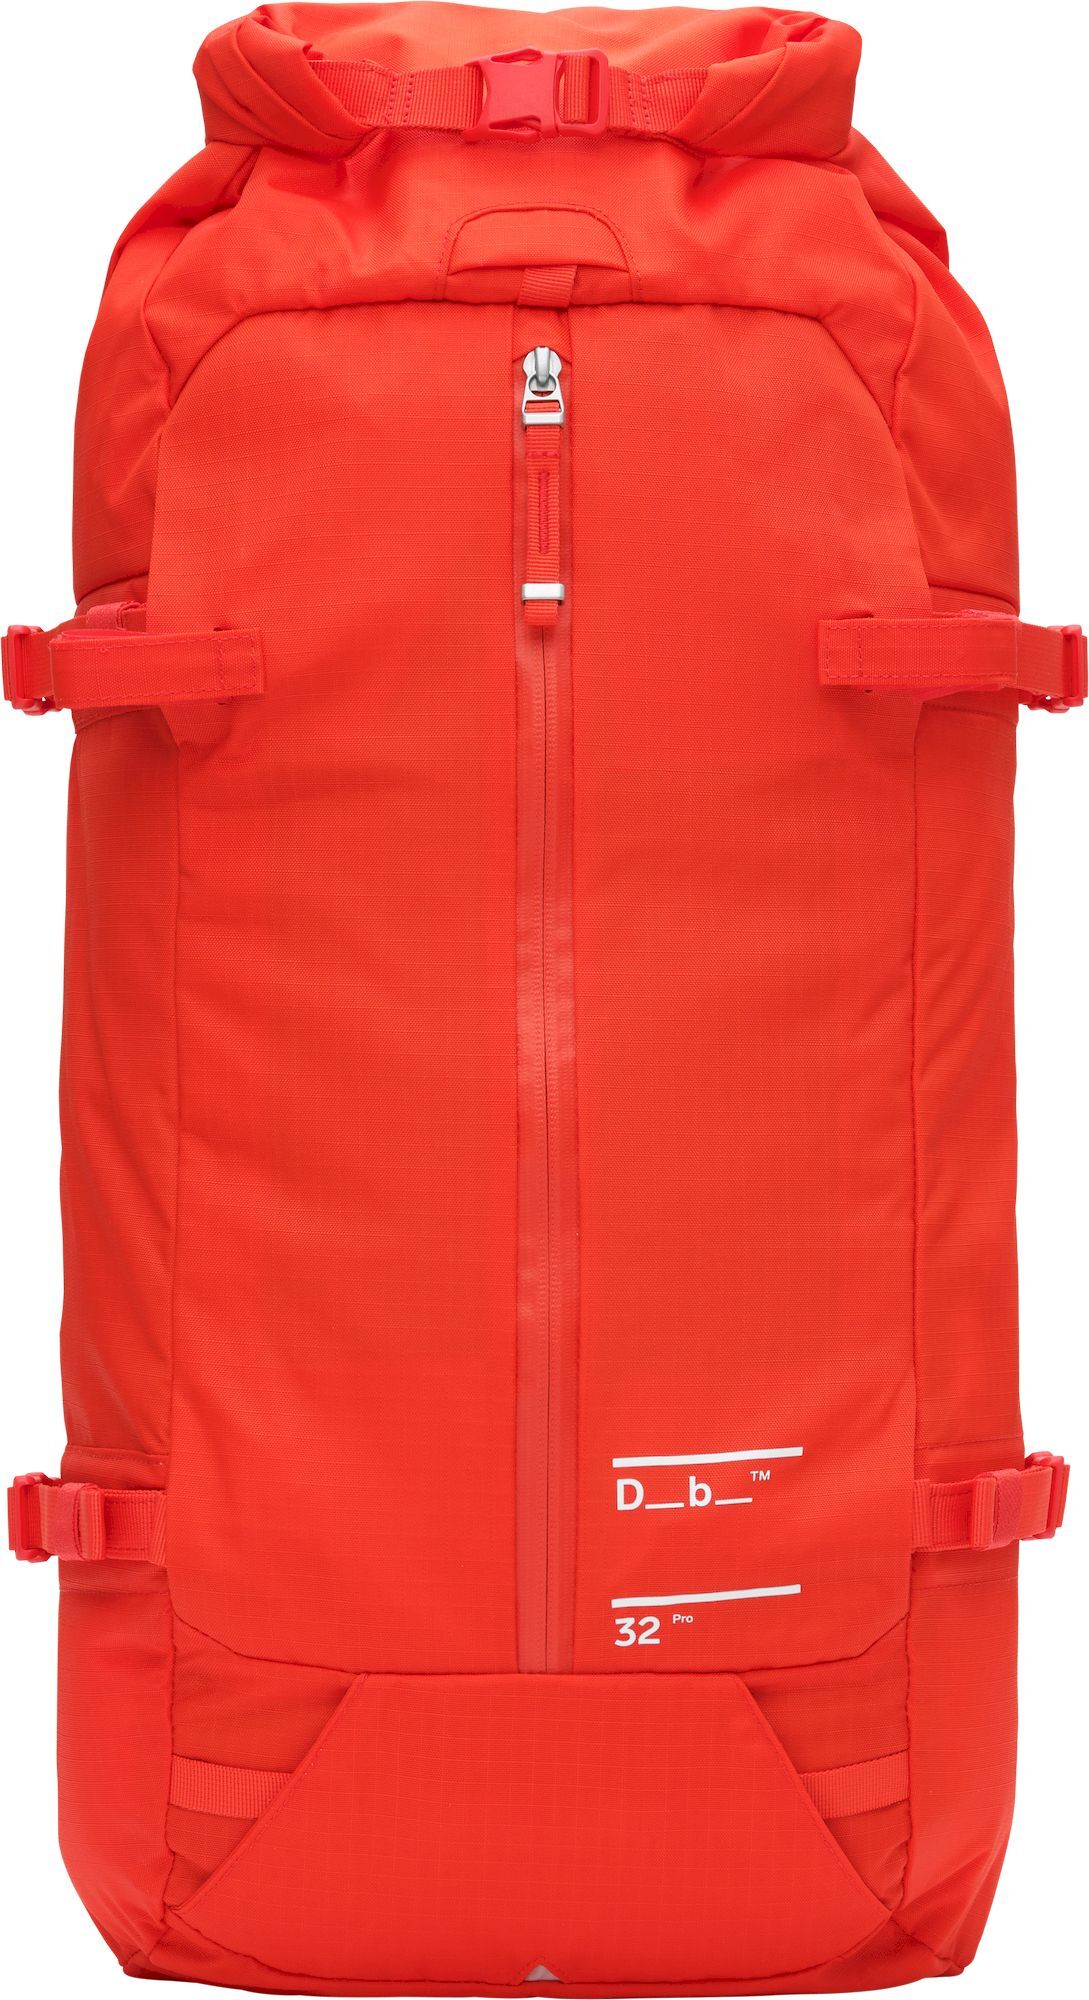 Db Journey Snow Pro Backpack - Sac à dos ski